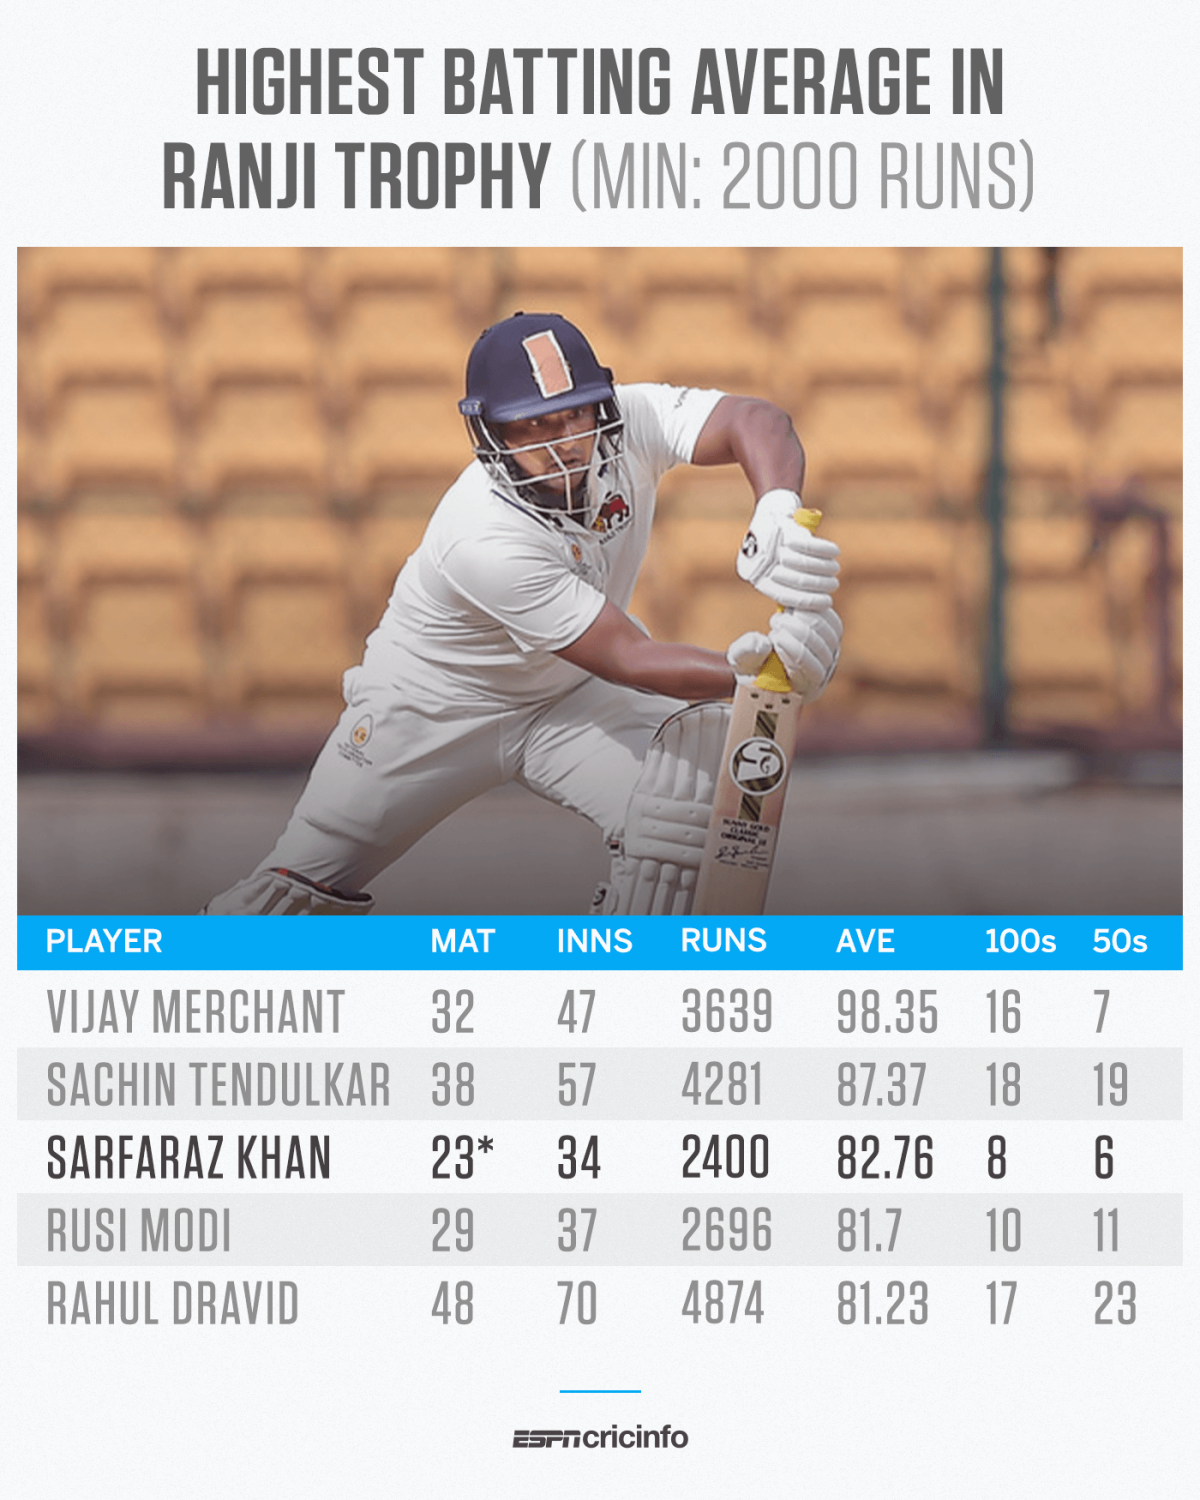 Highest batting average in Ranji Trophy